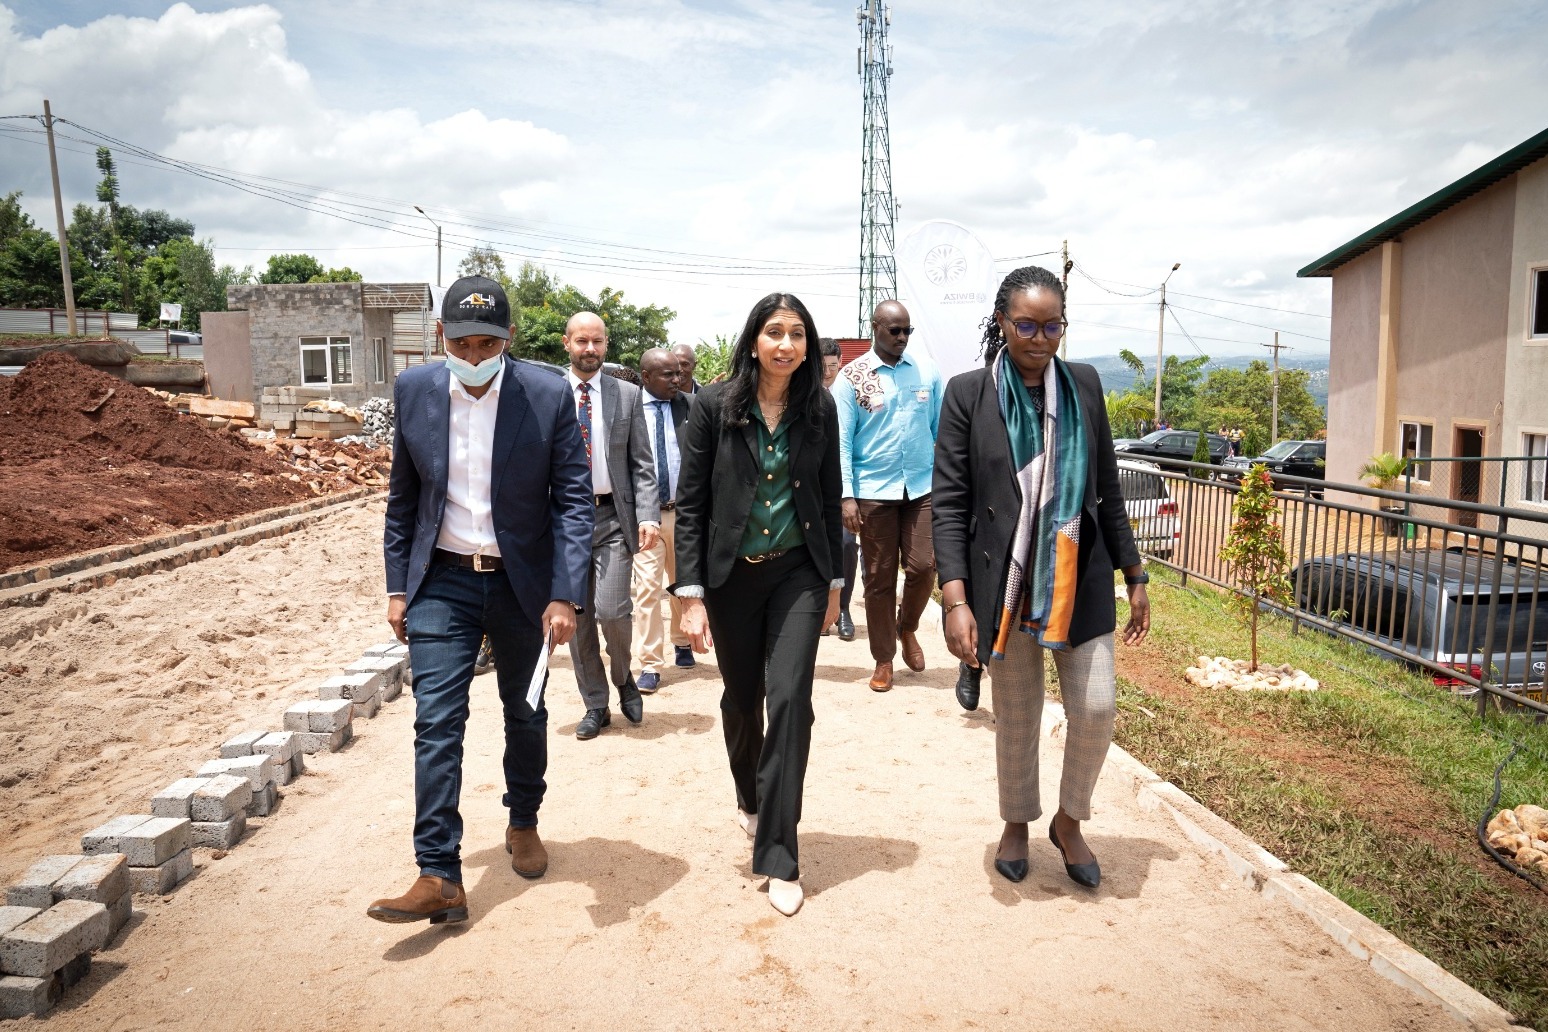 Home Secretary tours potential migrant housing in Rwanda 